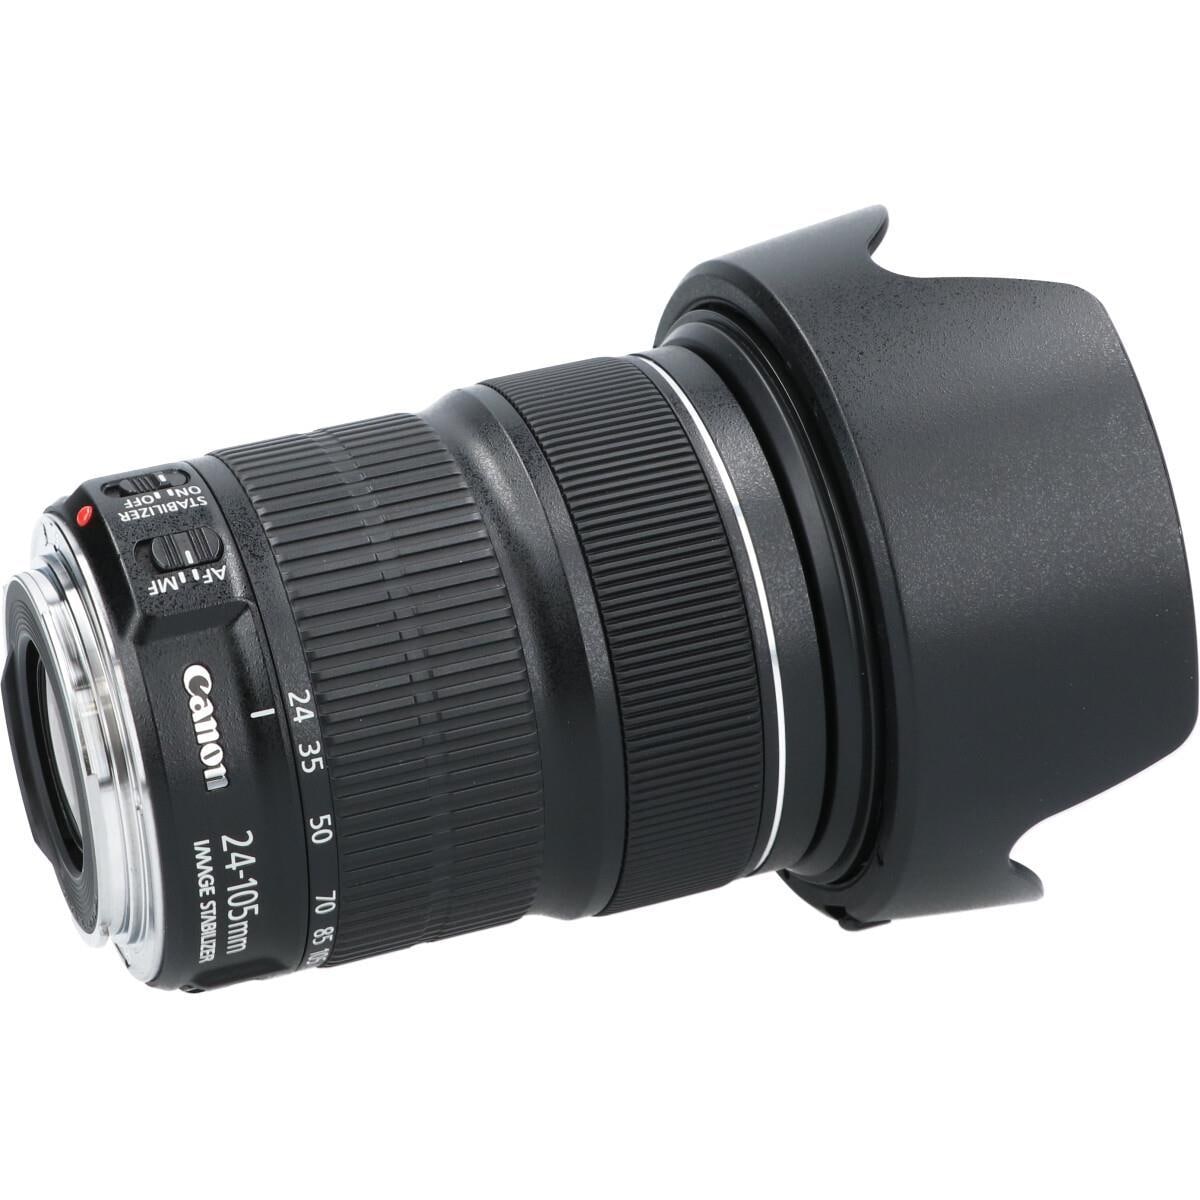 格安即納 Canon EF24-105mm F3.5-5.6 IS STM Xcdew-m30732877737 超激